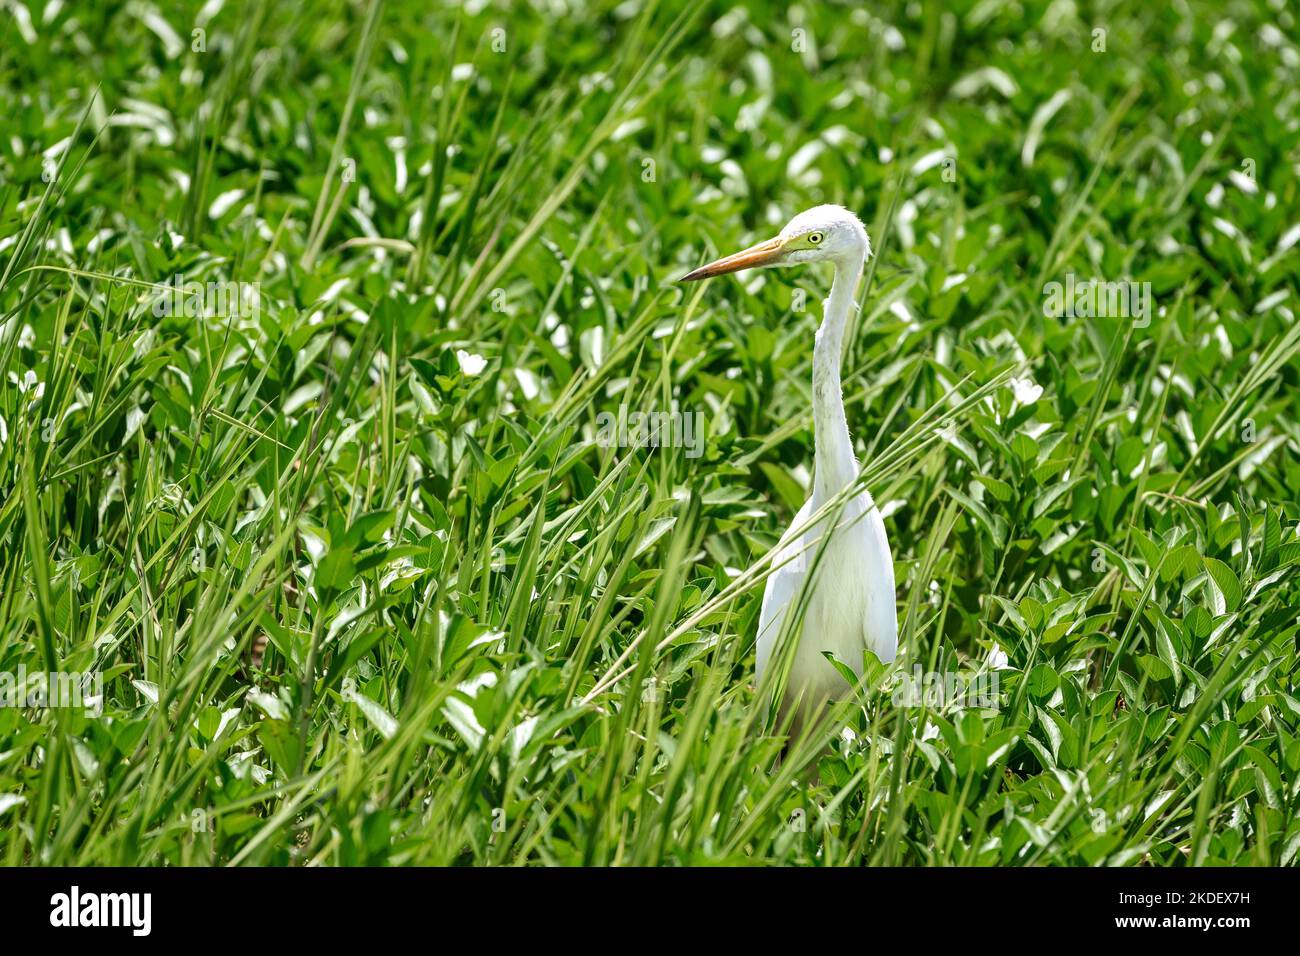 Eastern Great Egret foraging in wetland vegetation. Stock Photo